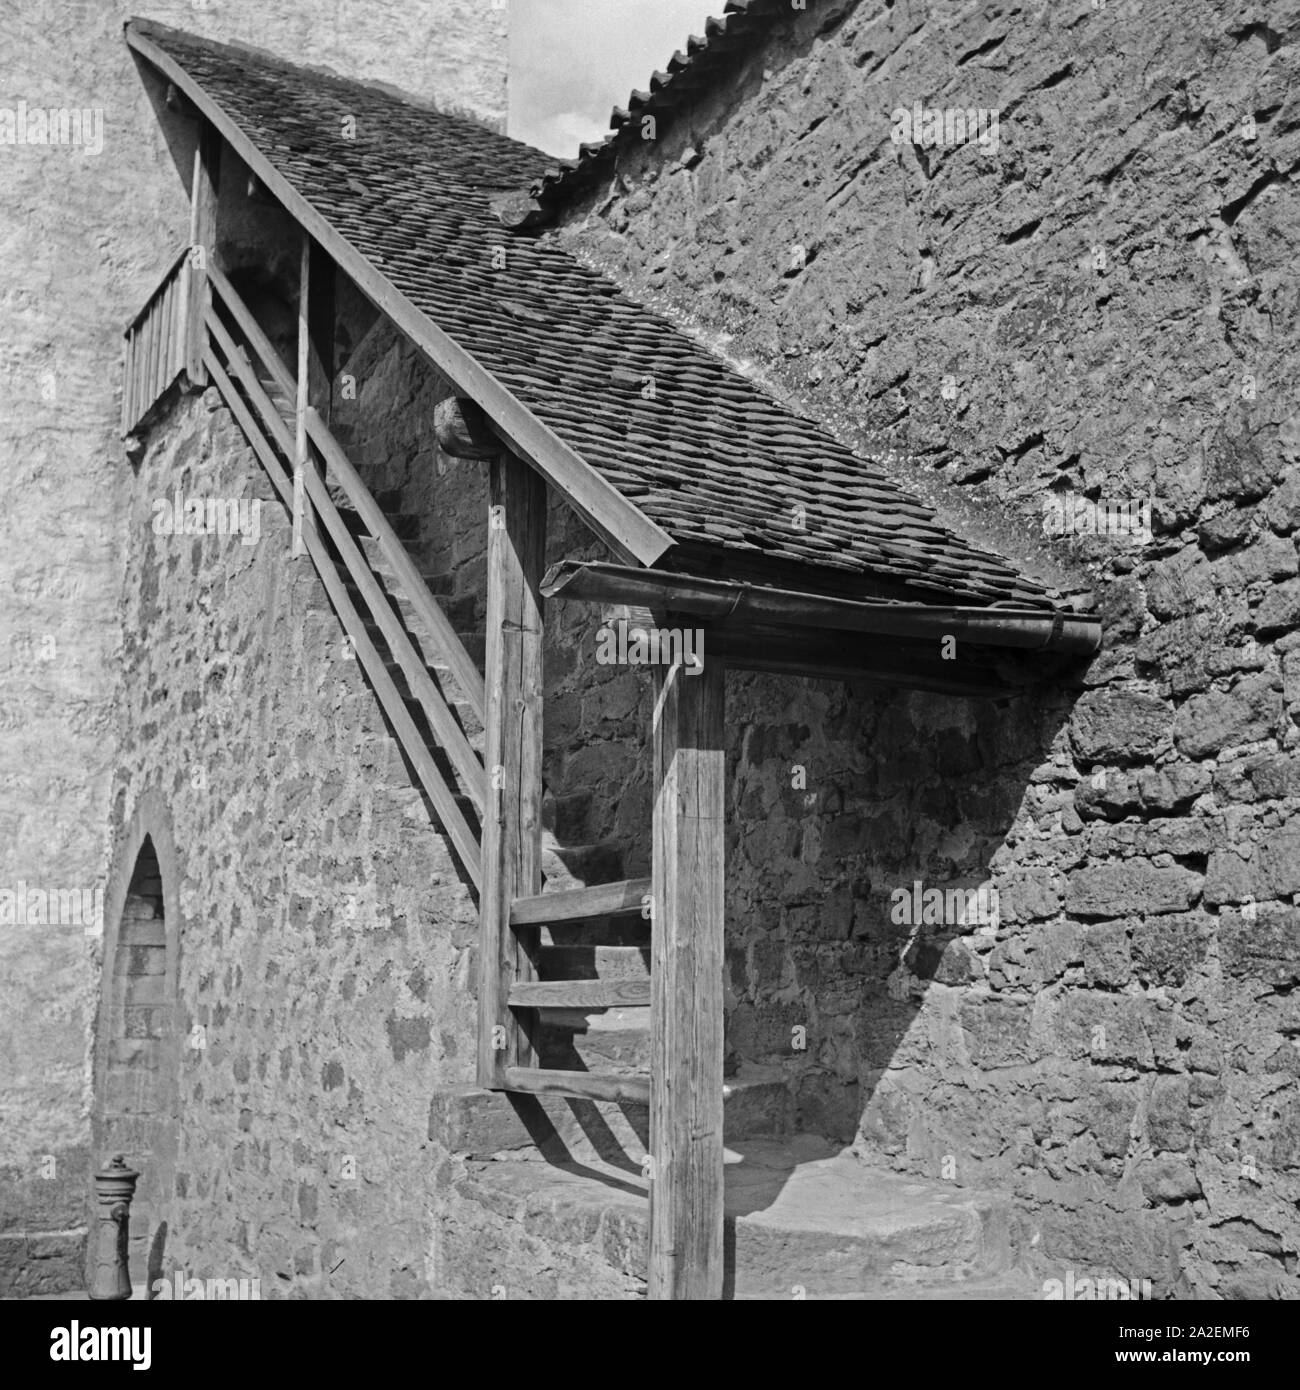 Aufgang zum Wehrgang auf der Stadtmauer von Dinkelsbühl, Deutschland 1930 er Jahre. Escaliers vers le haut de la muraille de la ville de Dinkelsbuehl, Allemagne 1930. Banque D'Images